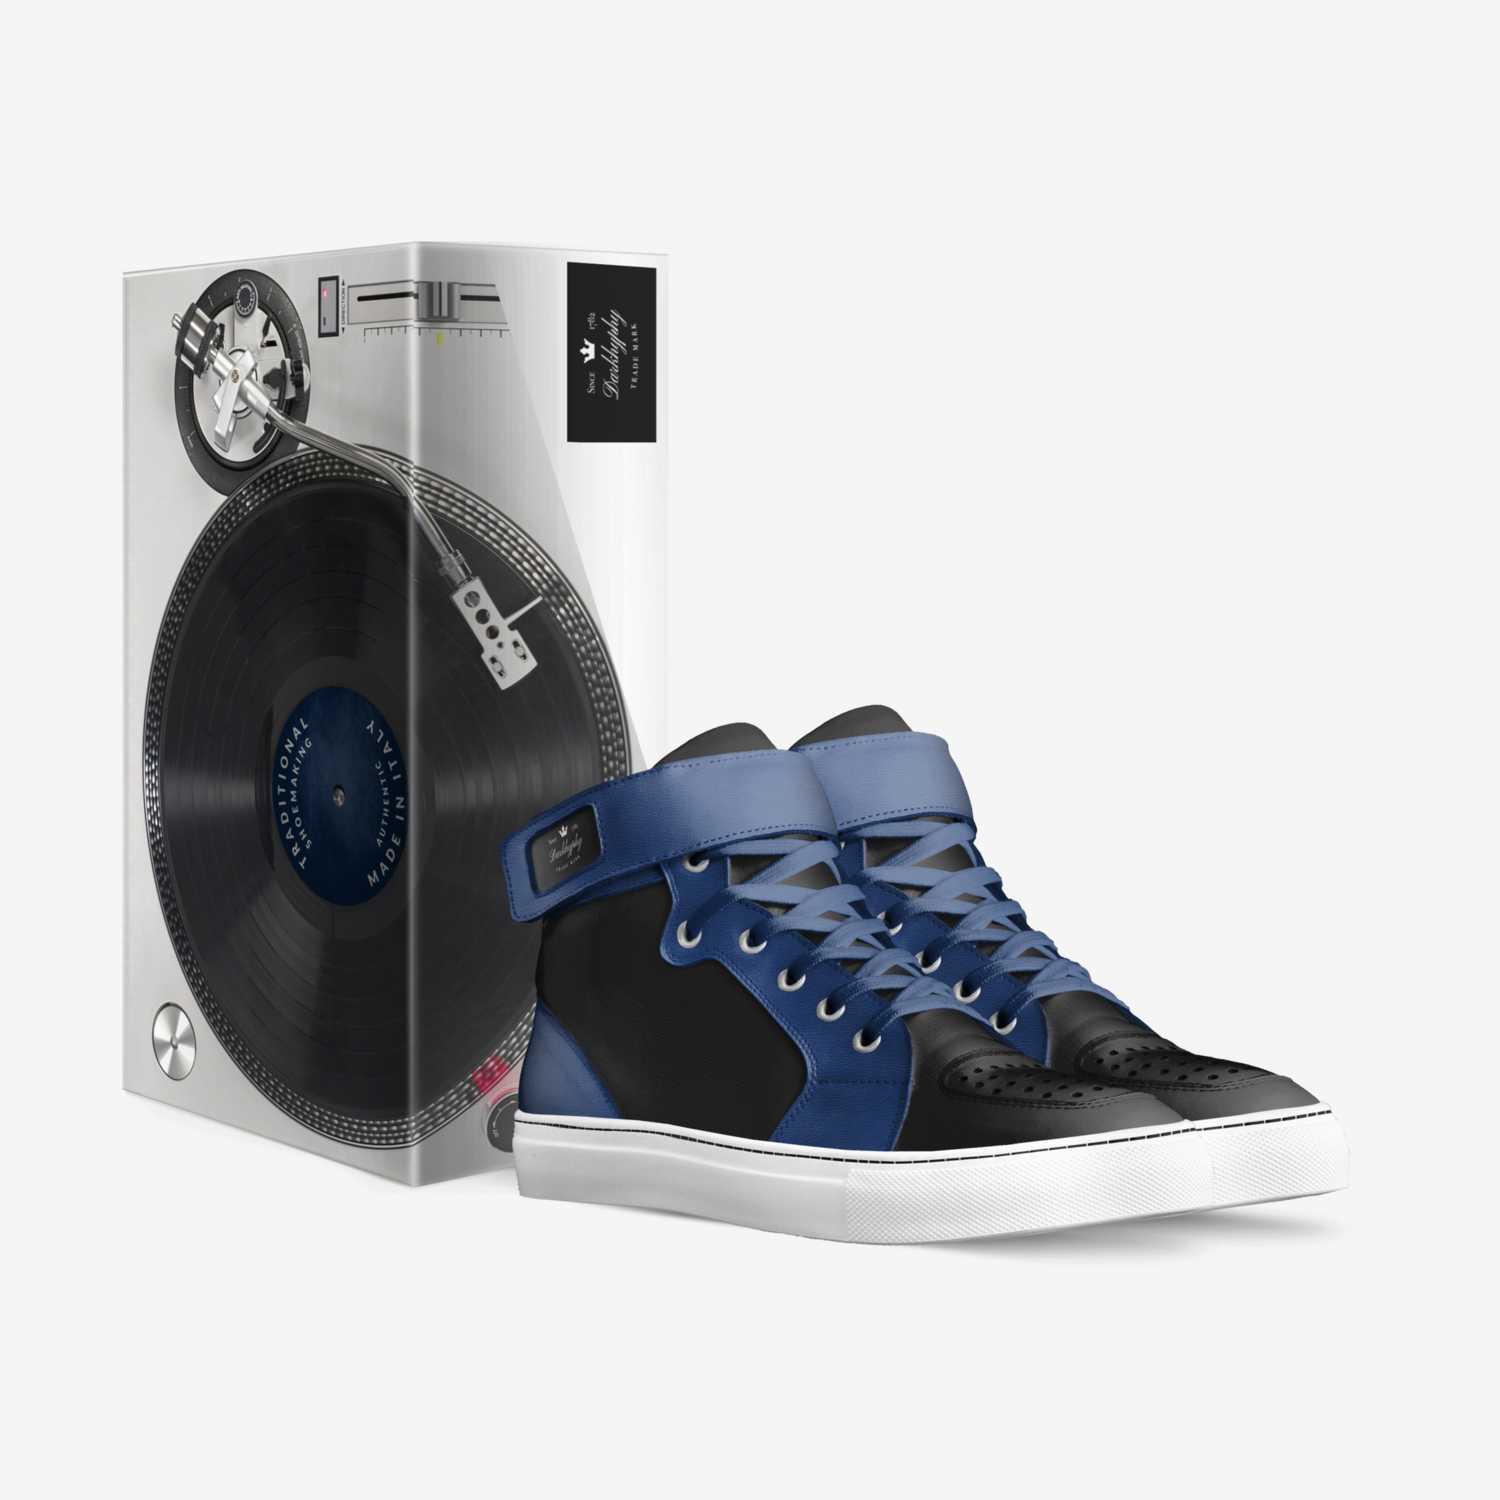 DARKHYPHY custom made in Italy shoes by Dephrey Daumer | Box view